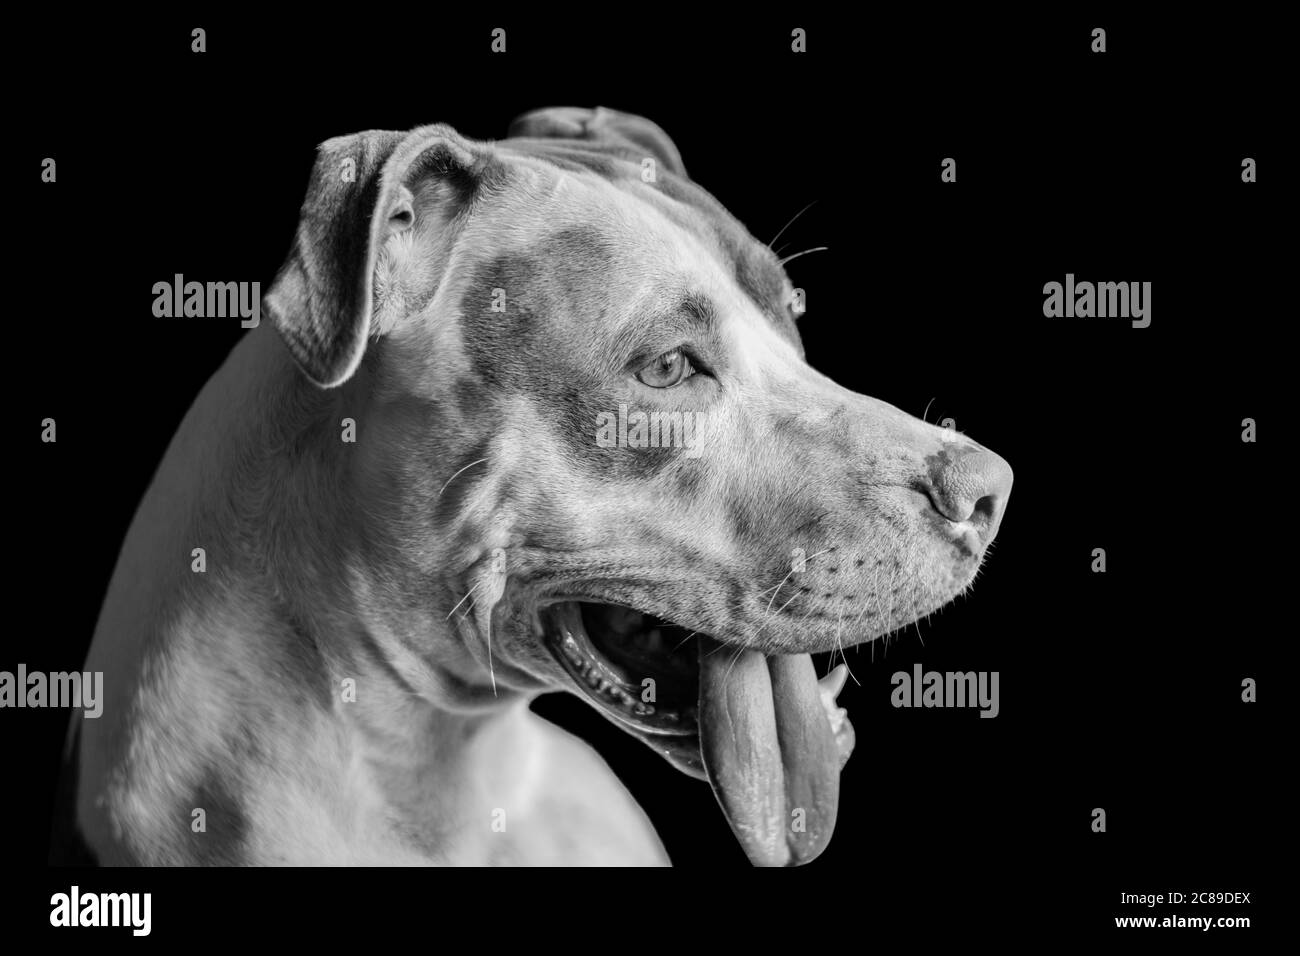 Hund, Haustier, Pitbull, Welpe, Haustiere Hund Gesicht, Hund Nahaufnahme, Pitbull Gesicht Stockfoto